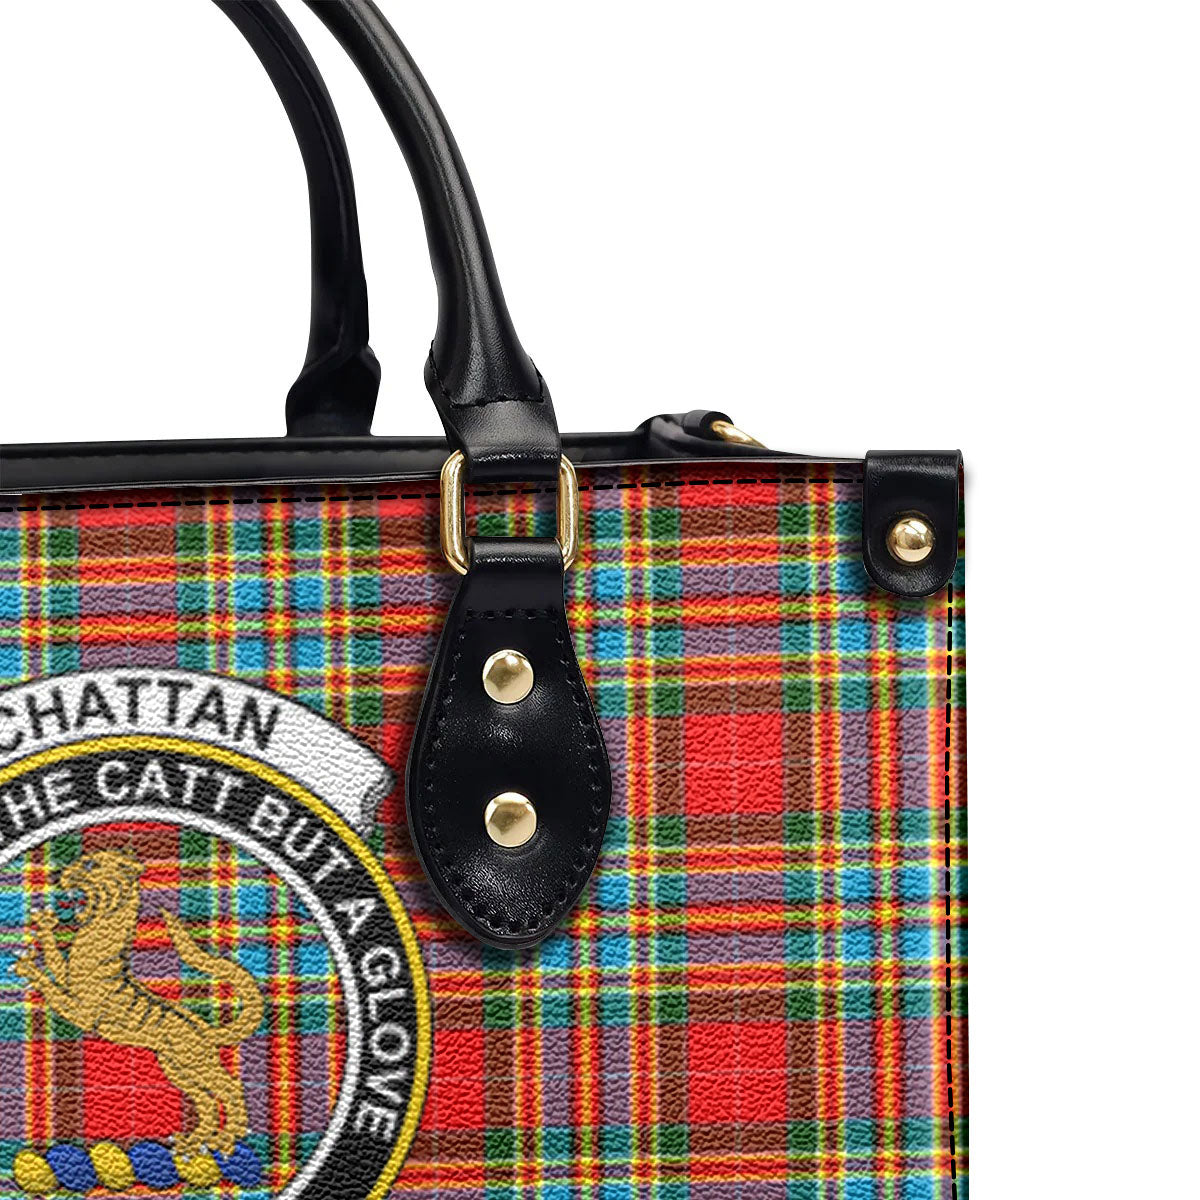 Chattan Tartan Crest Leather Handbag